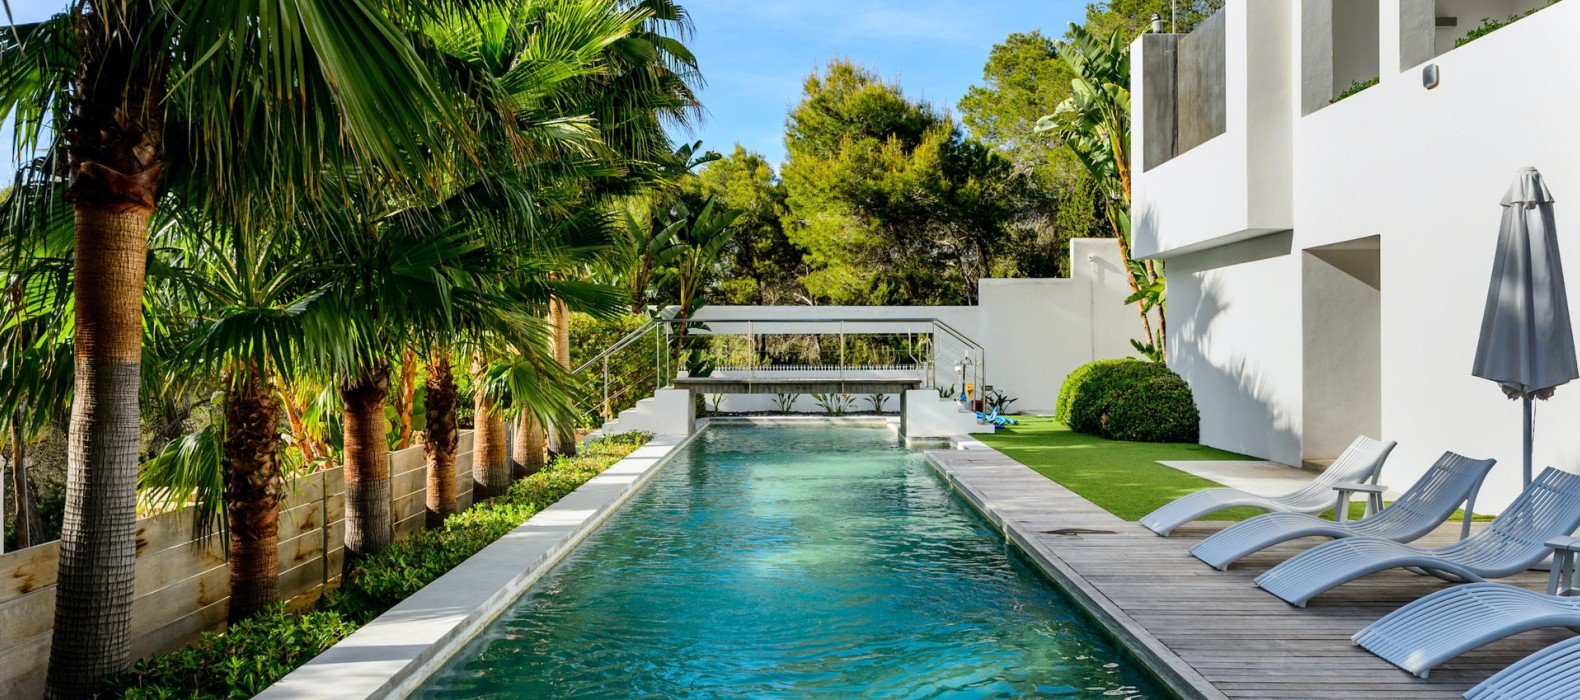 Pool area view of Casa Elegance in Ibiza